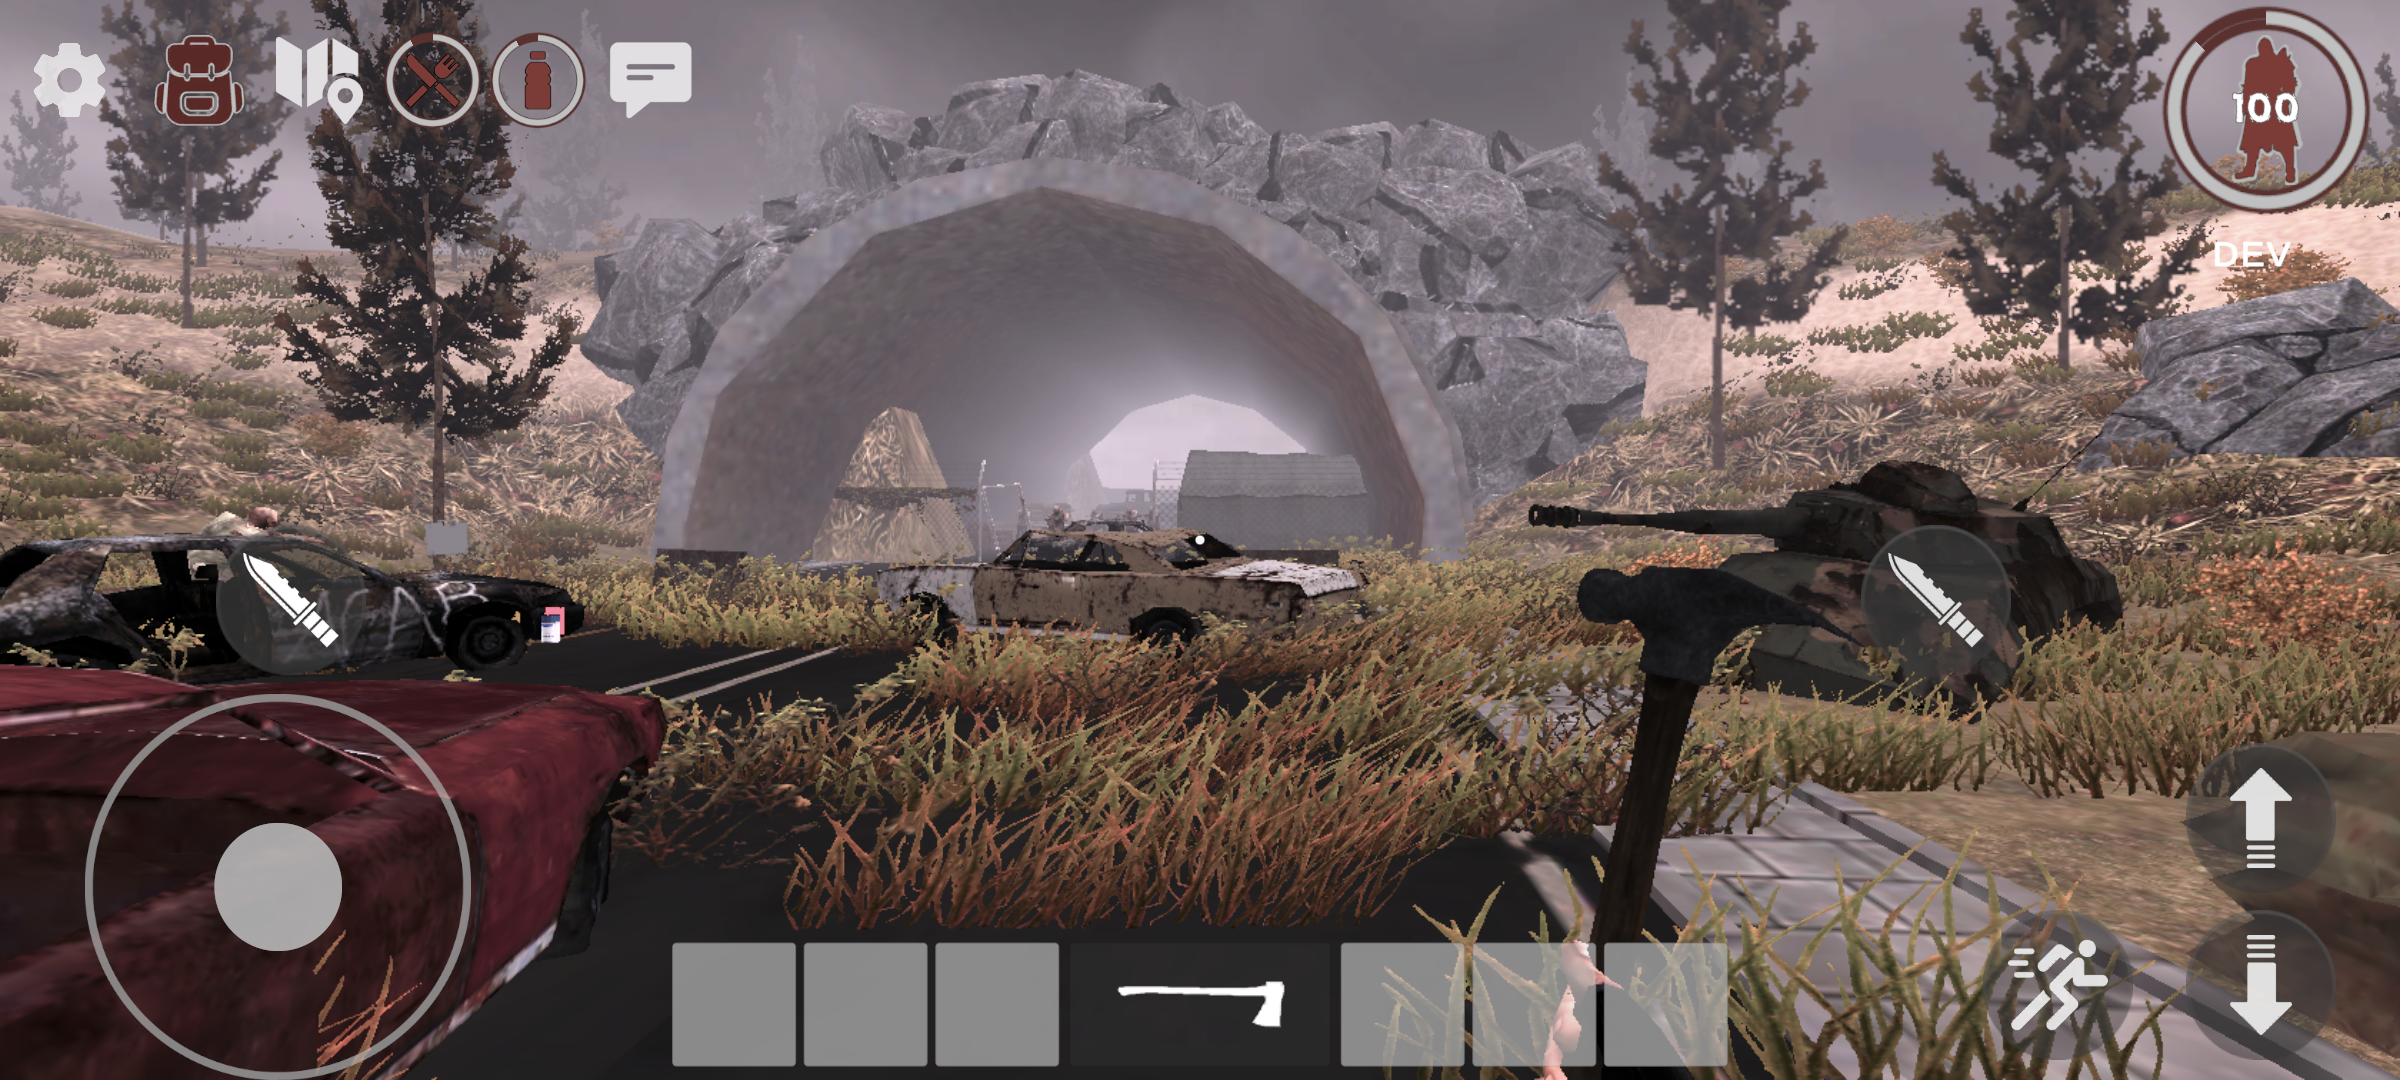 SurZeus Open World Survival screenshot game